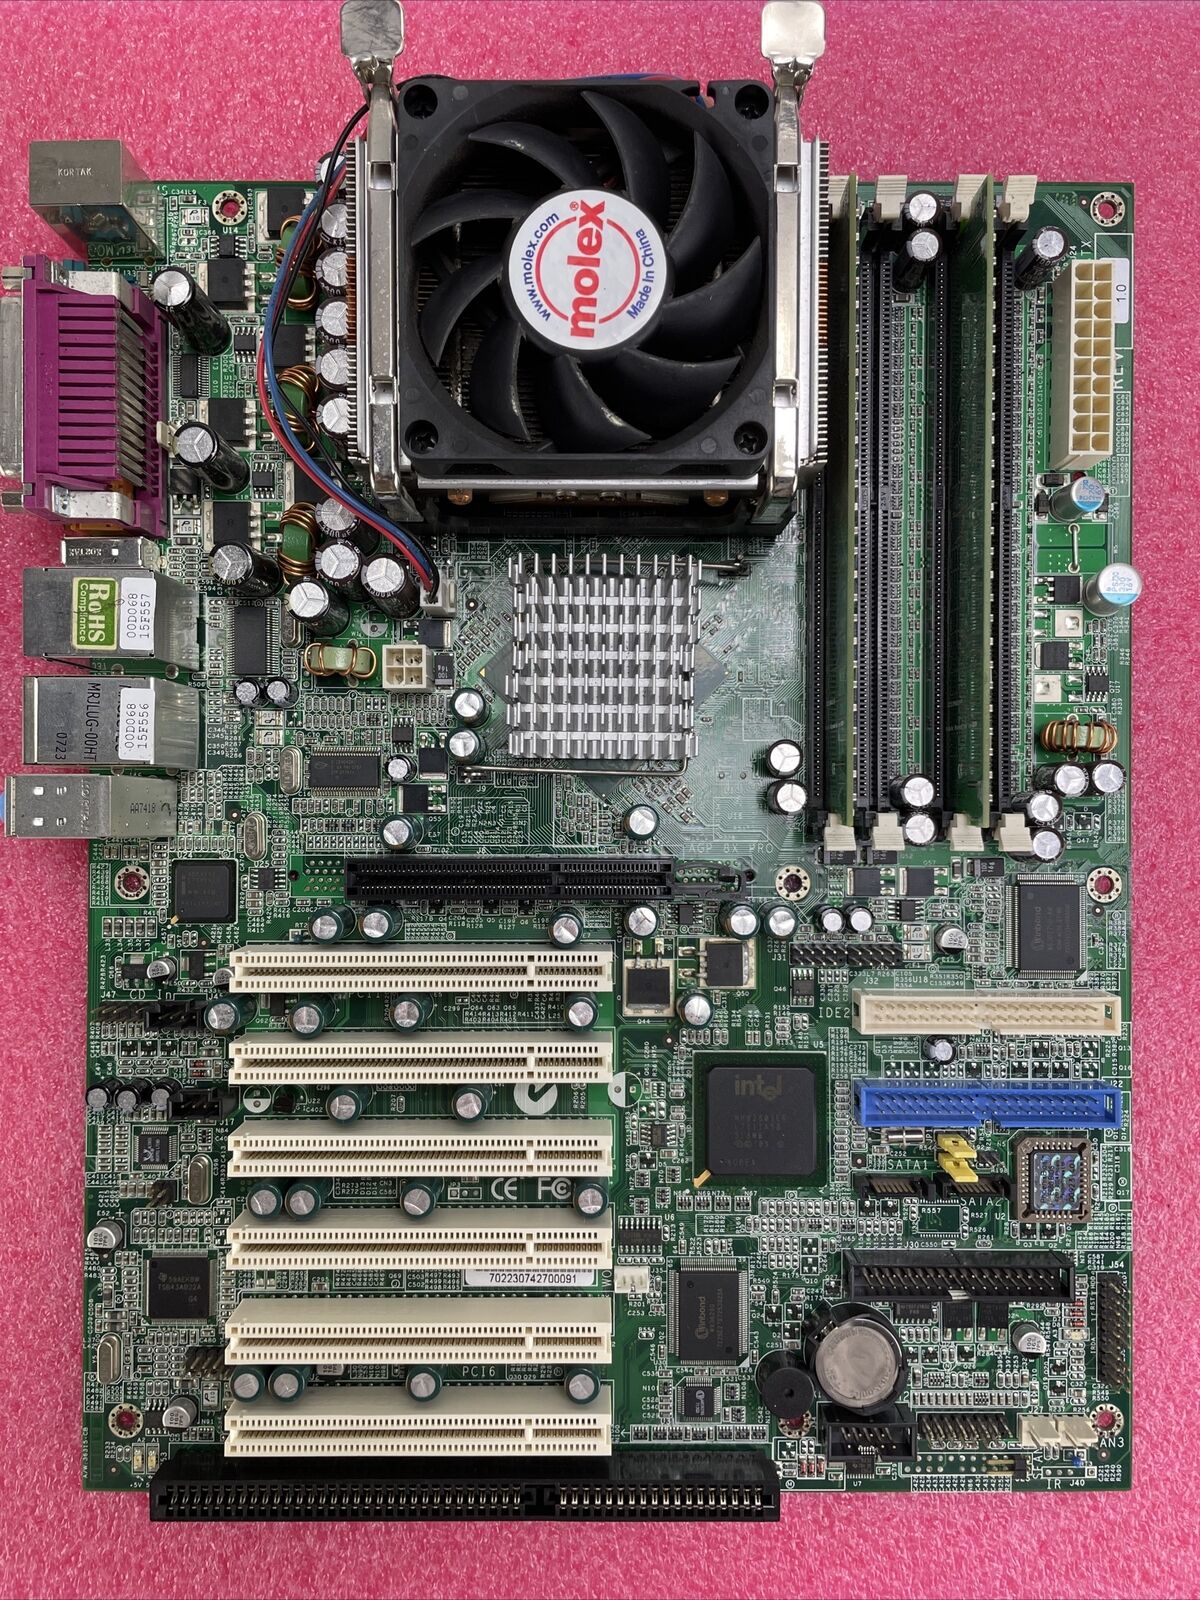 70220-001 PWB VER 1.0 Motherboard Intel Pentium 4 3GHz 512MB RAM w/Shield